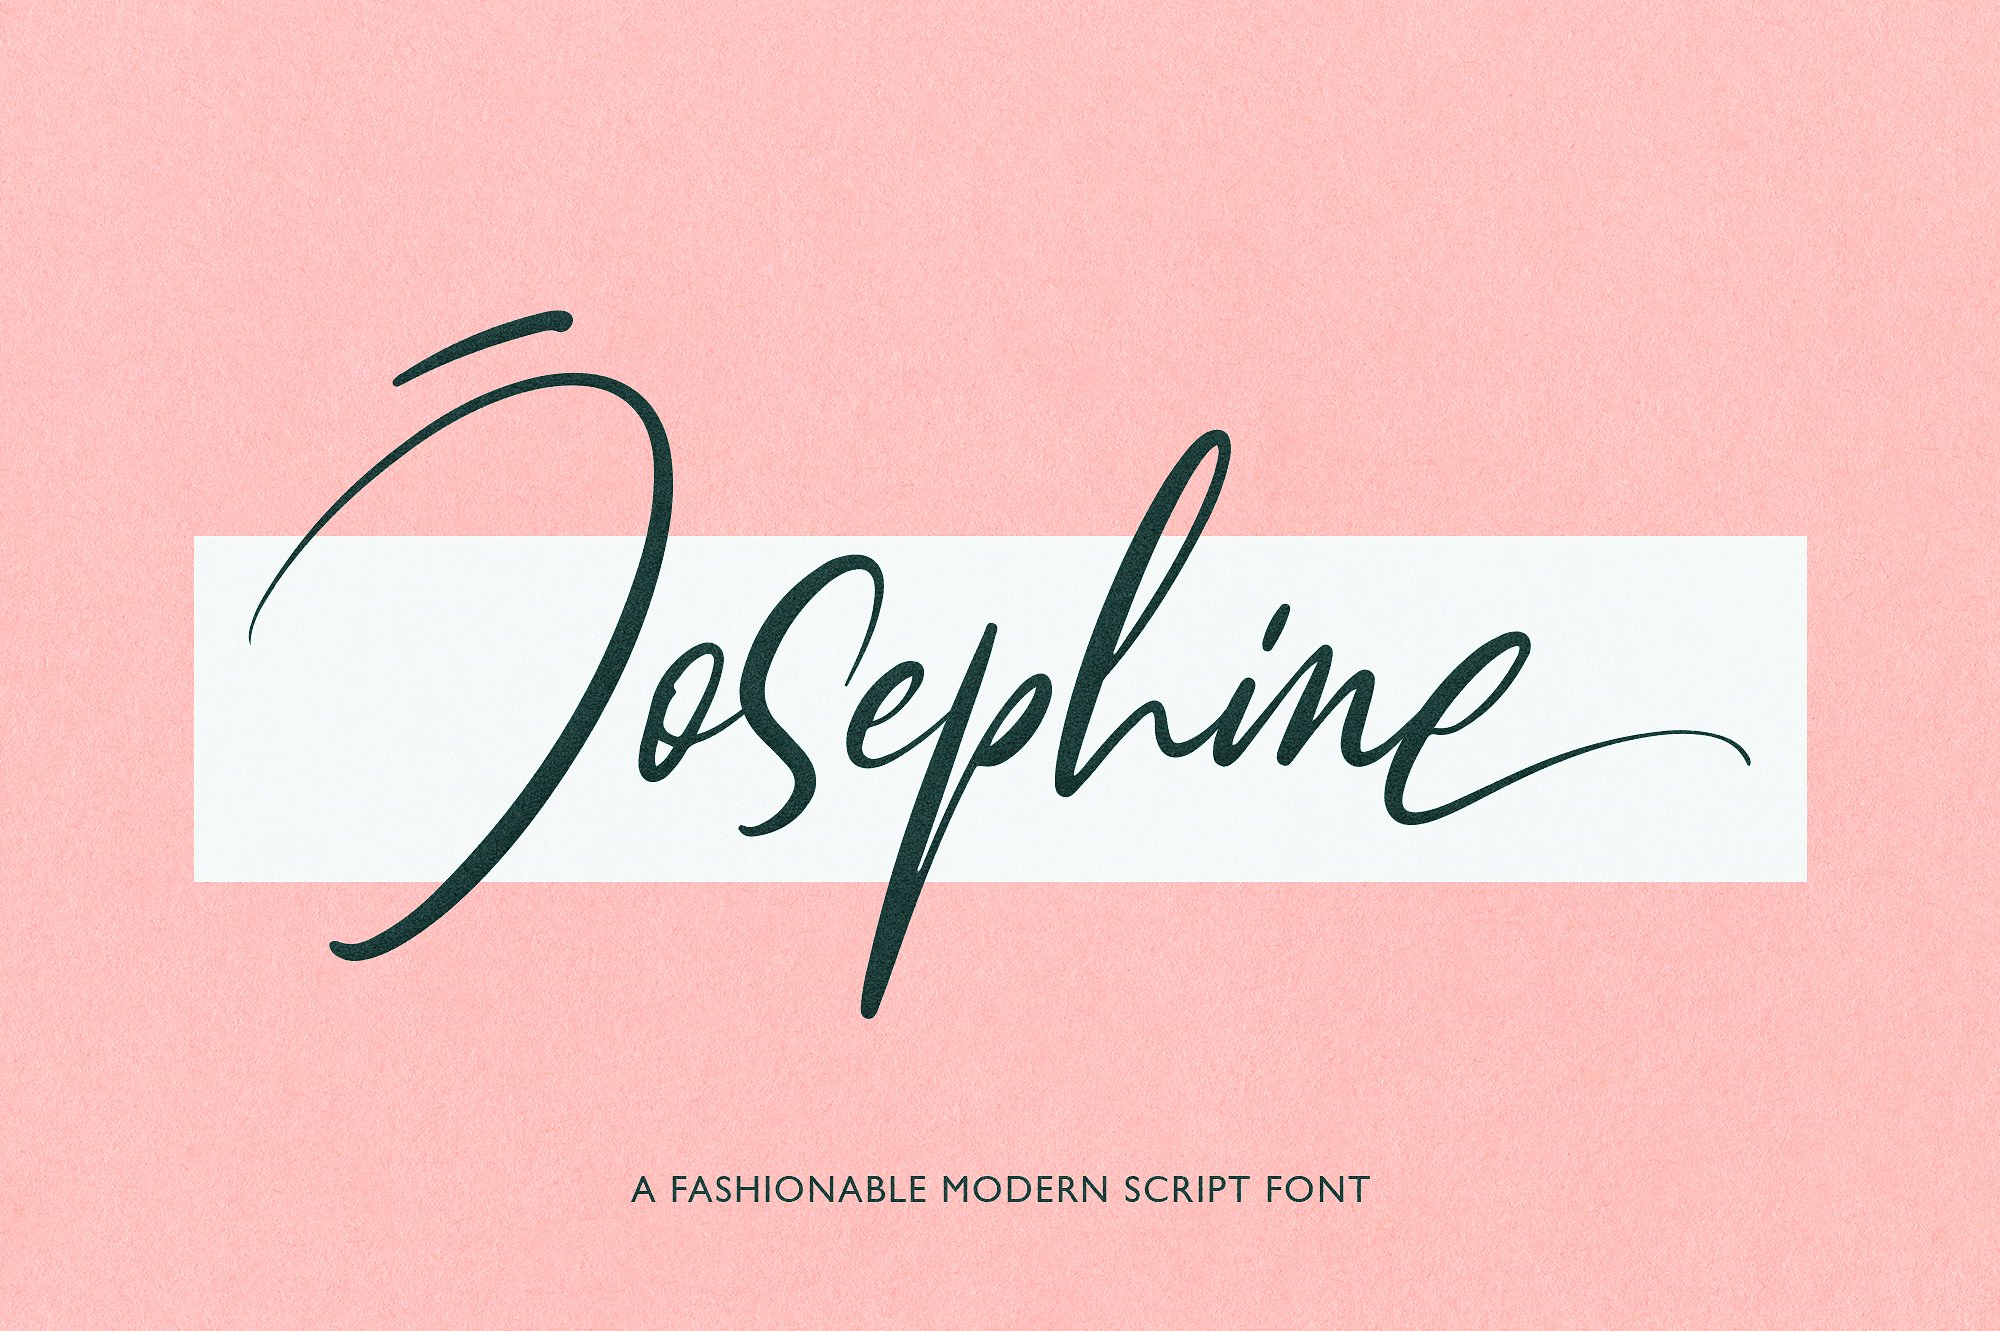 Josephine a fashionable modern script font